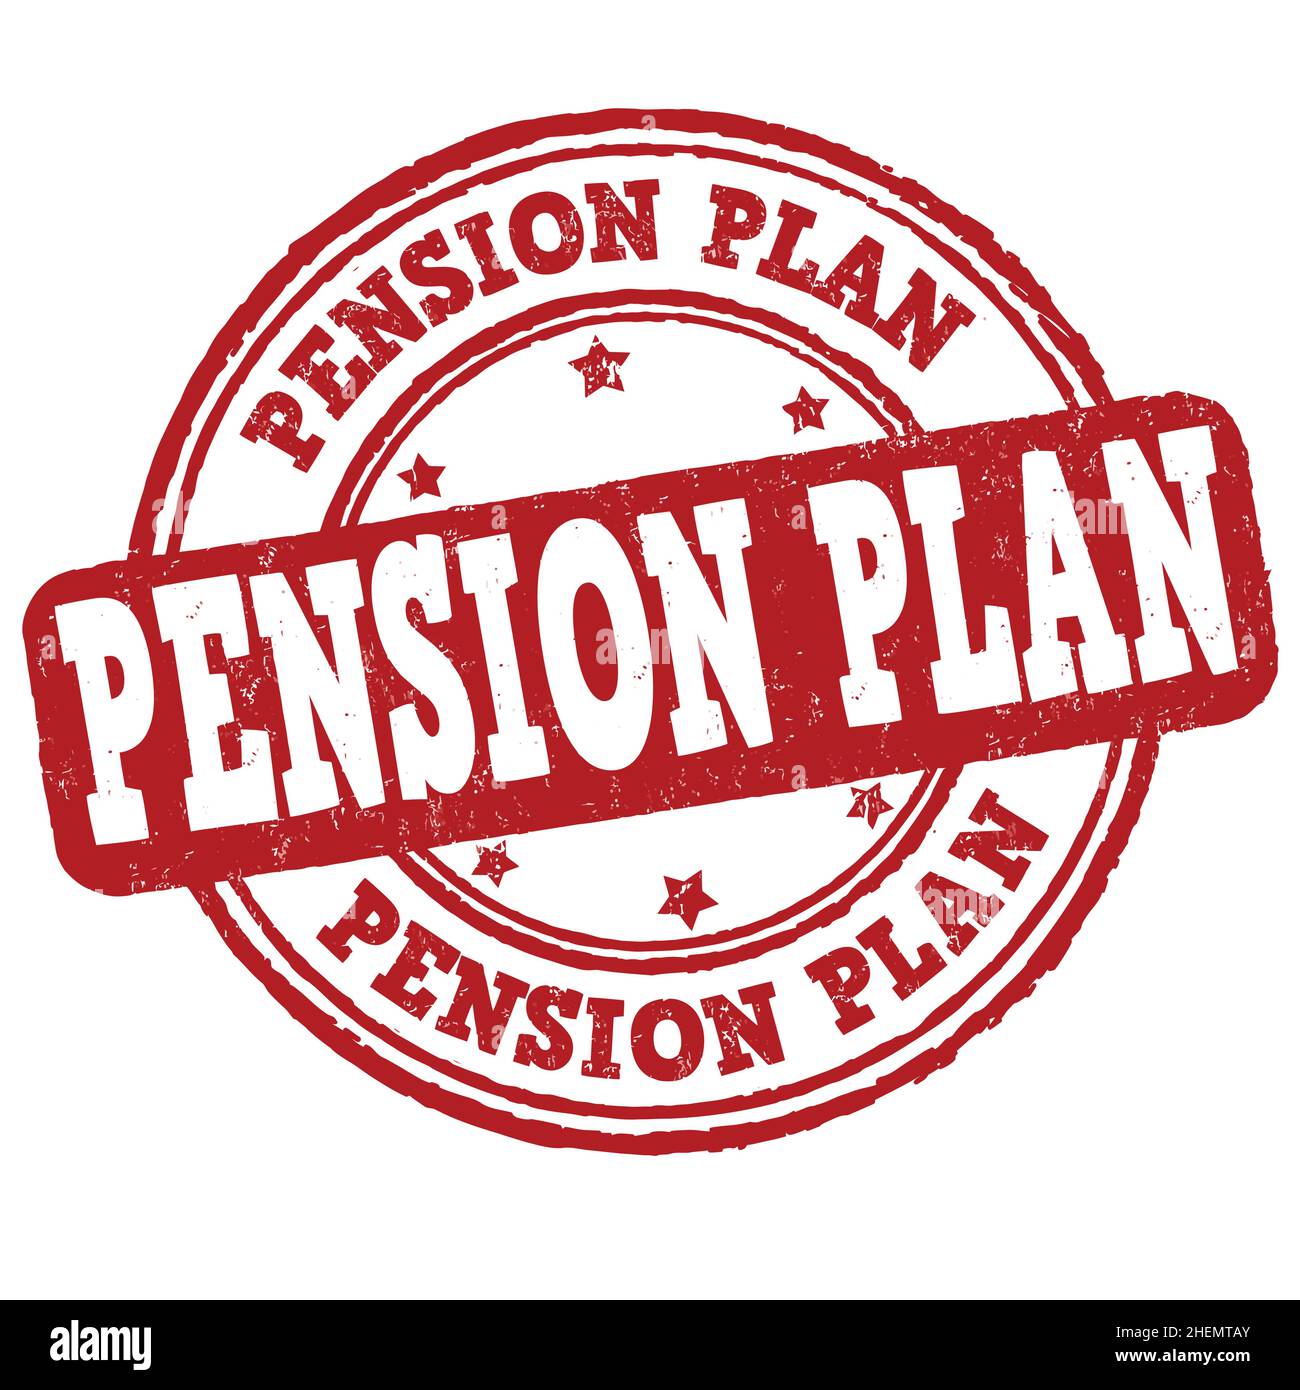 Pension plan grunge rubber stamp on white background, vector illustration Stock Vector